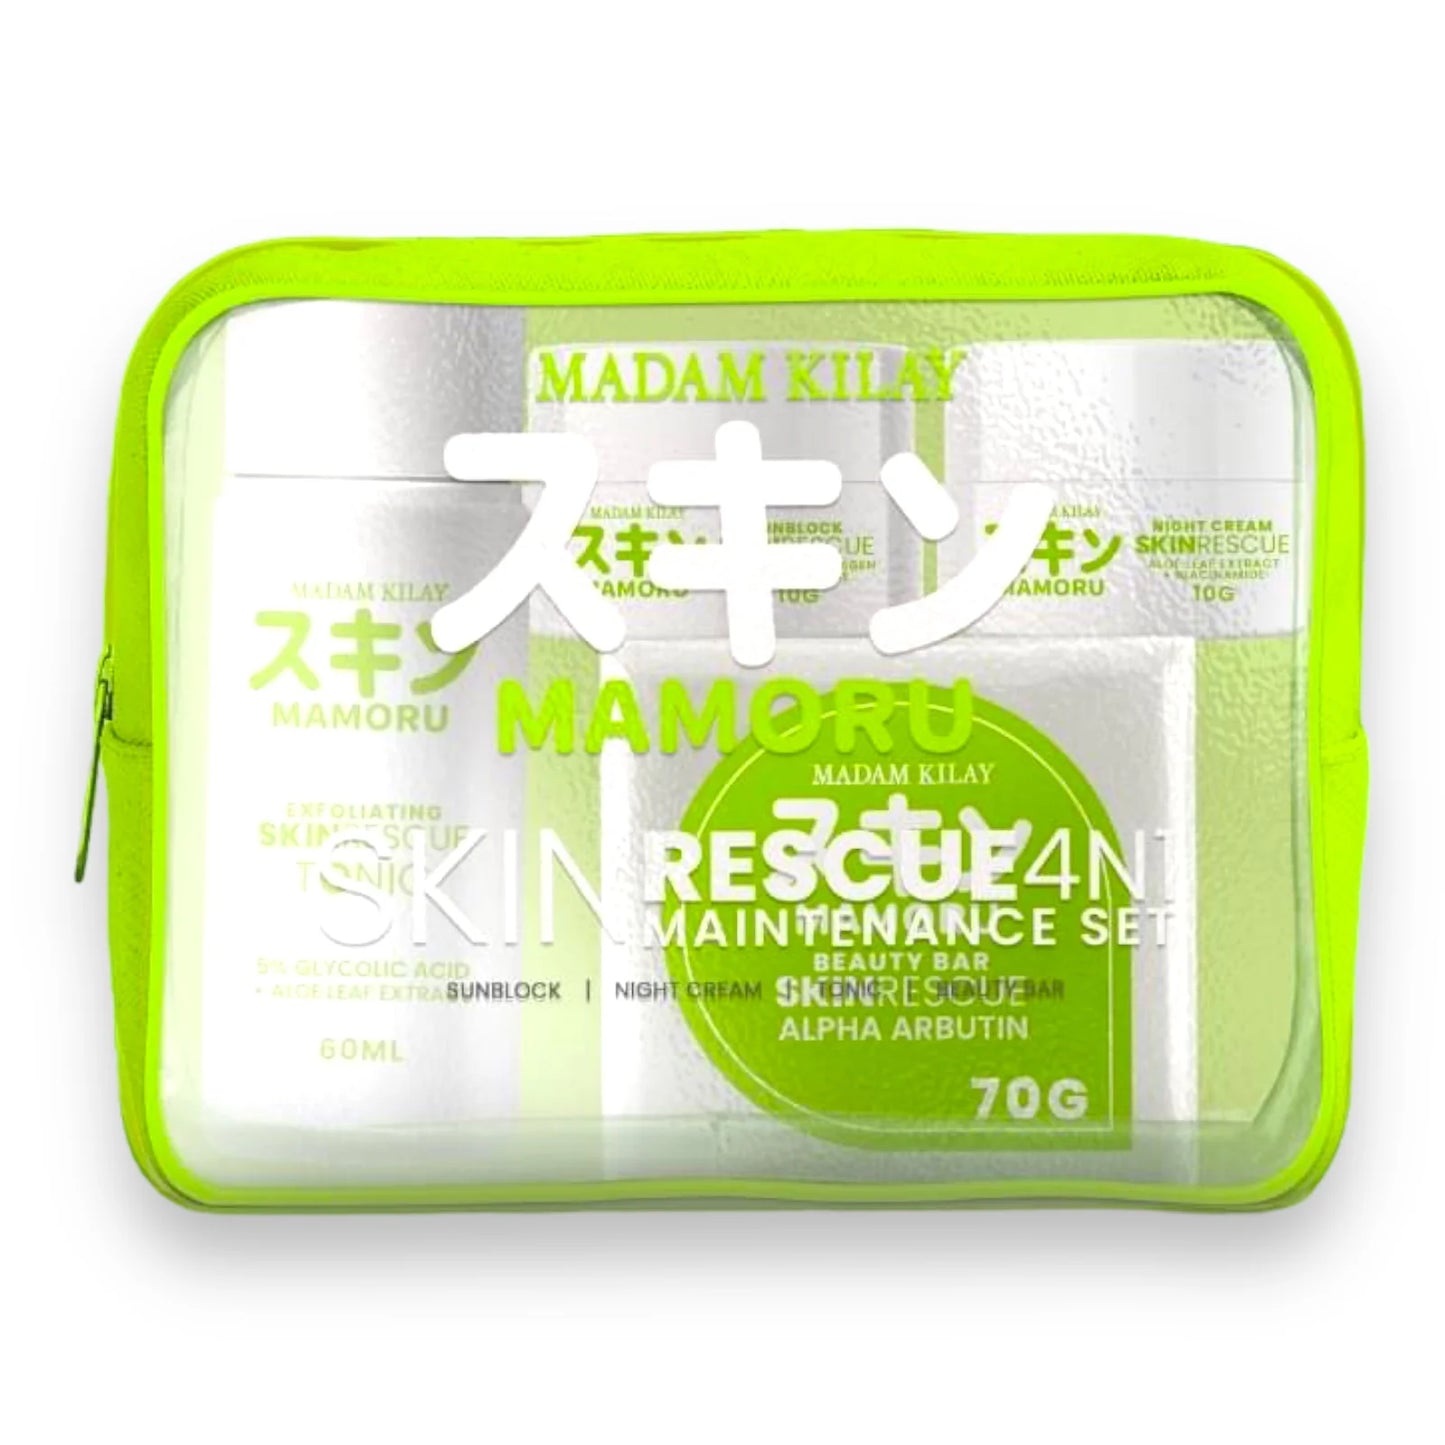 Mamoru Skin Rescue 4in1 Maintenance Set